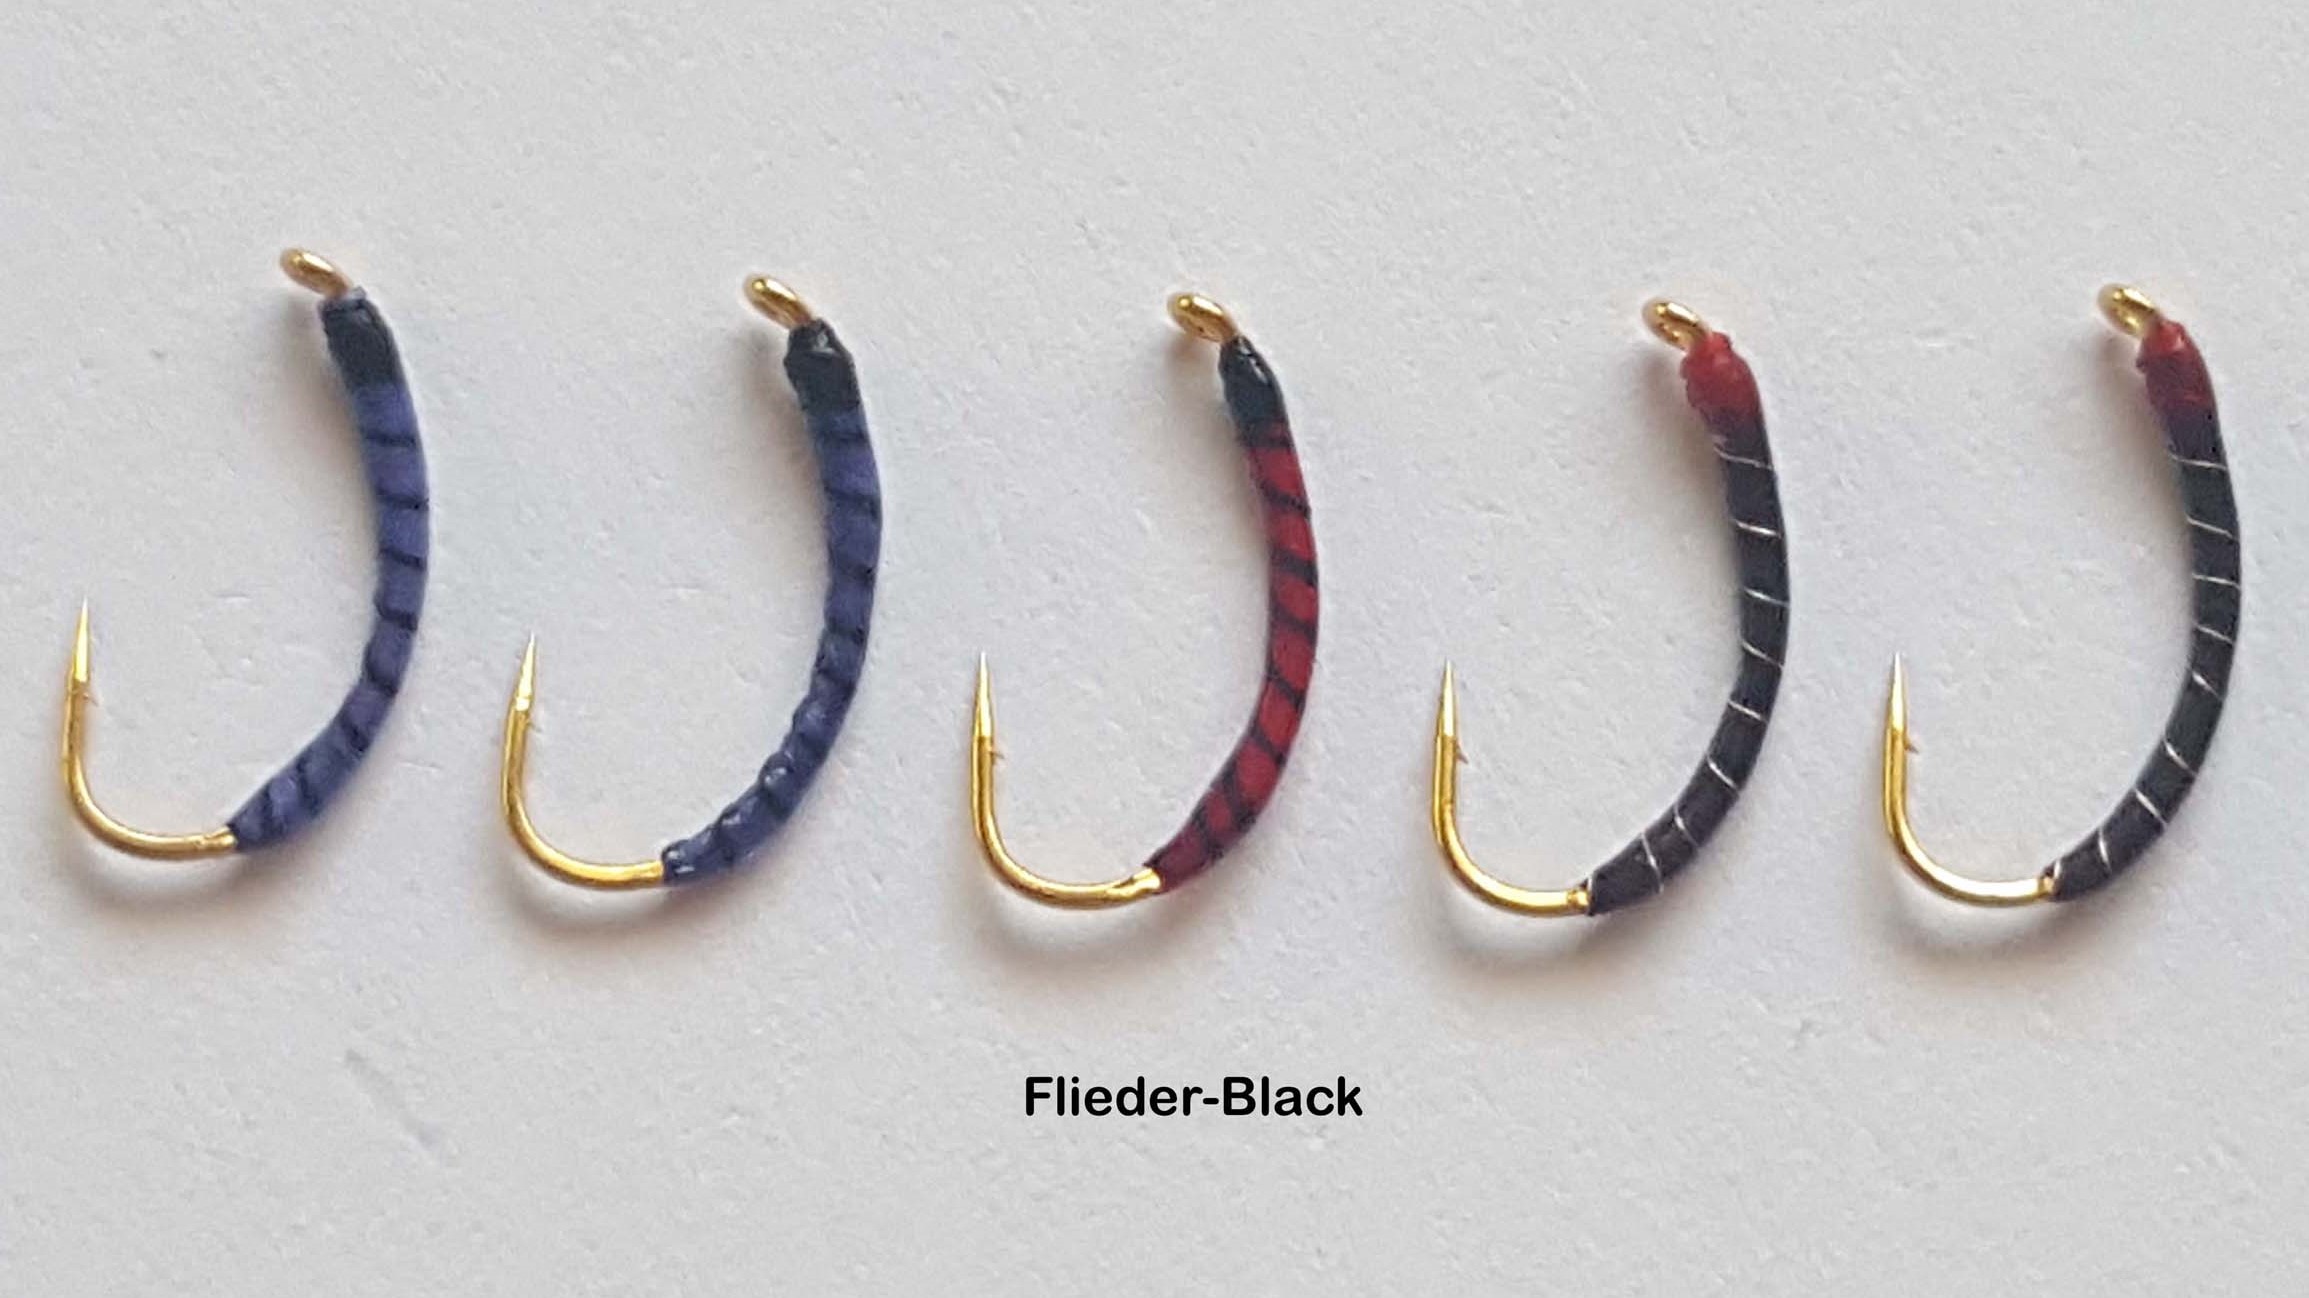 Hegene Flieder-Black